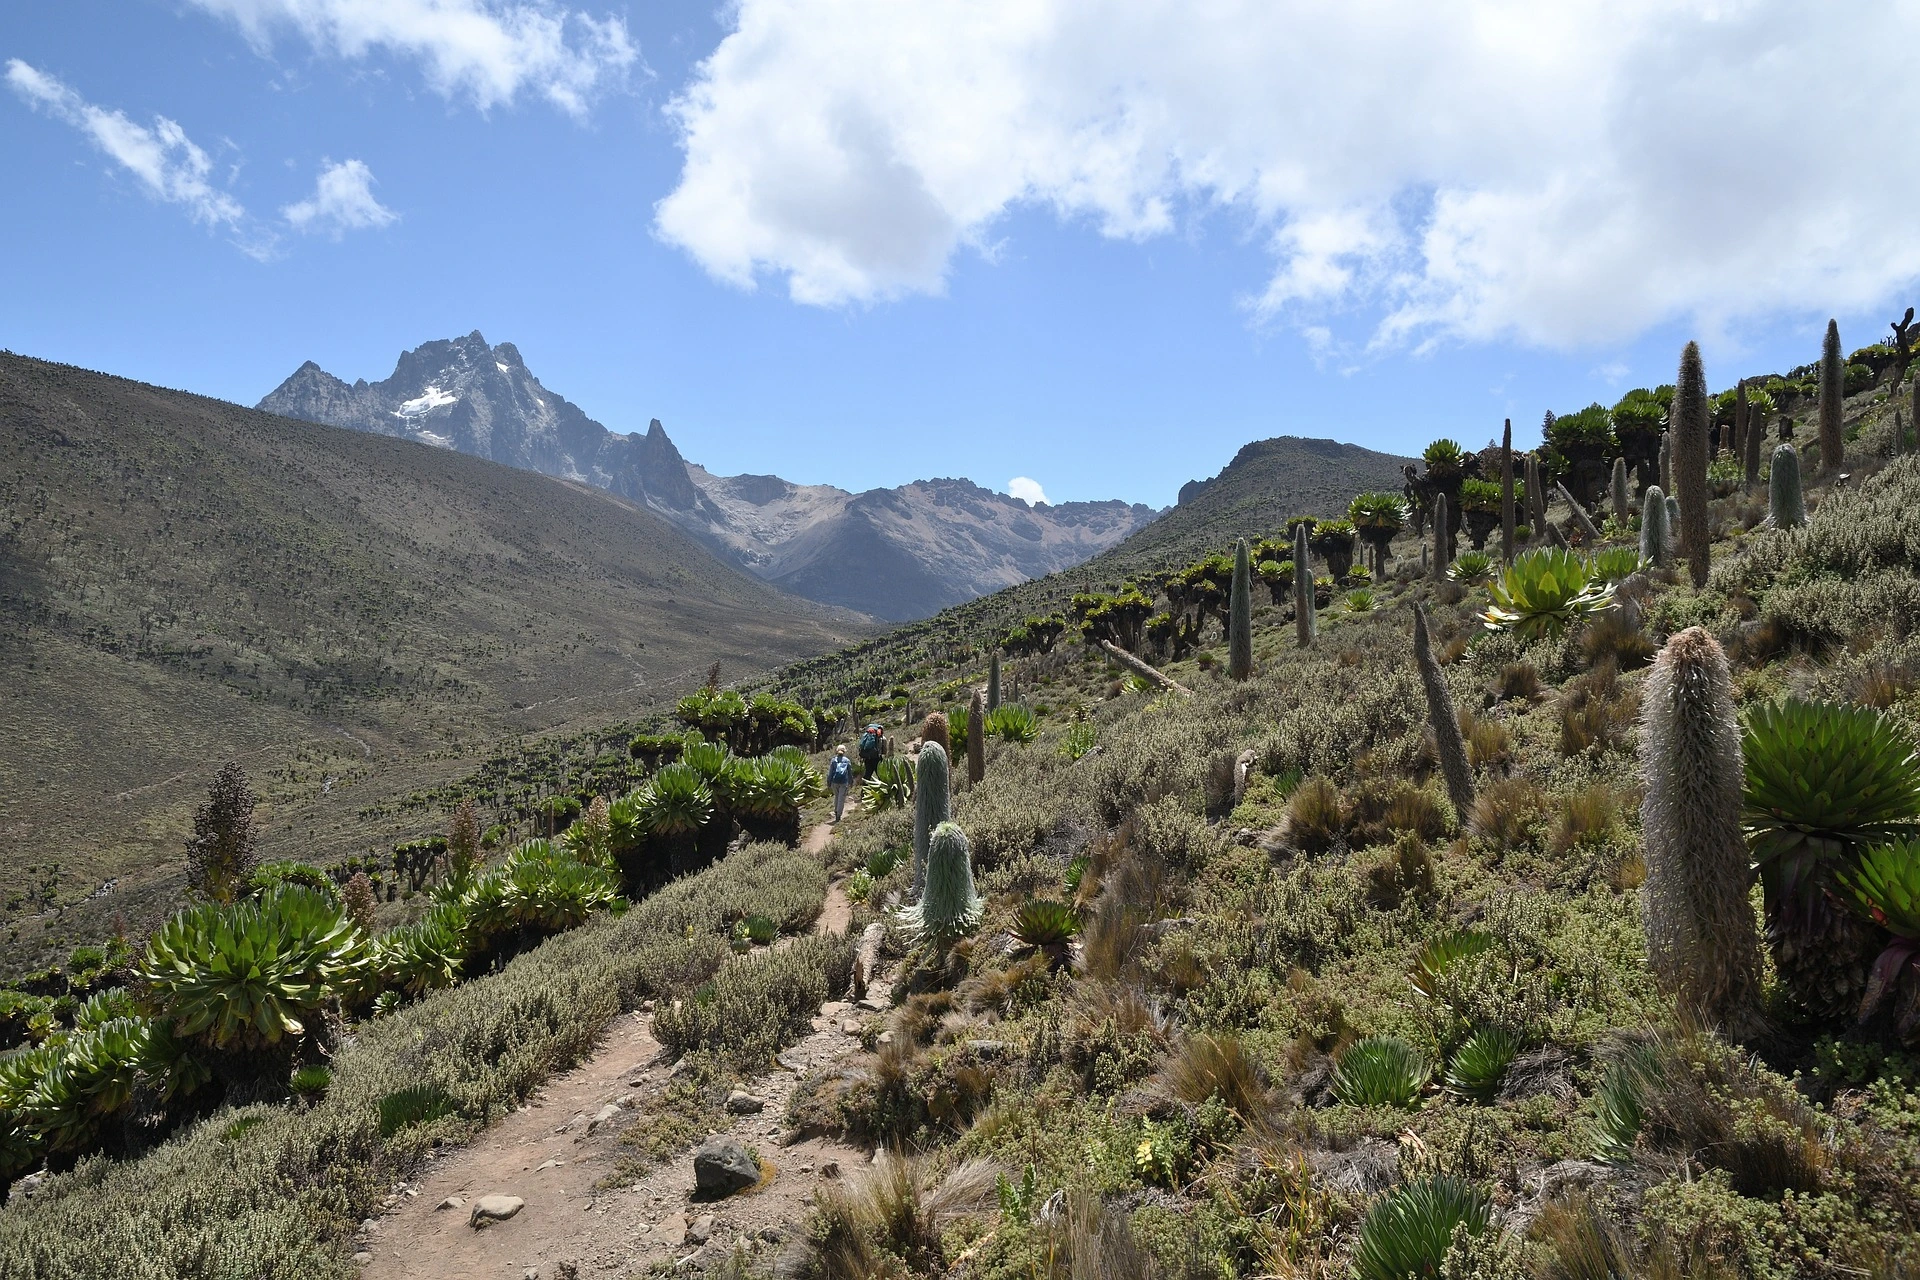 I enjoy this journey - The Mount Kenya Times